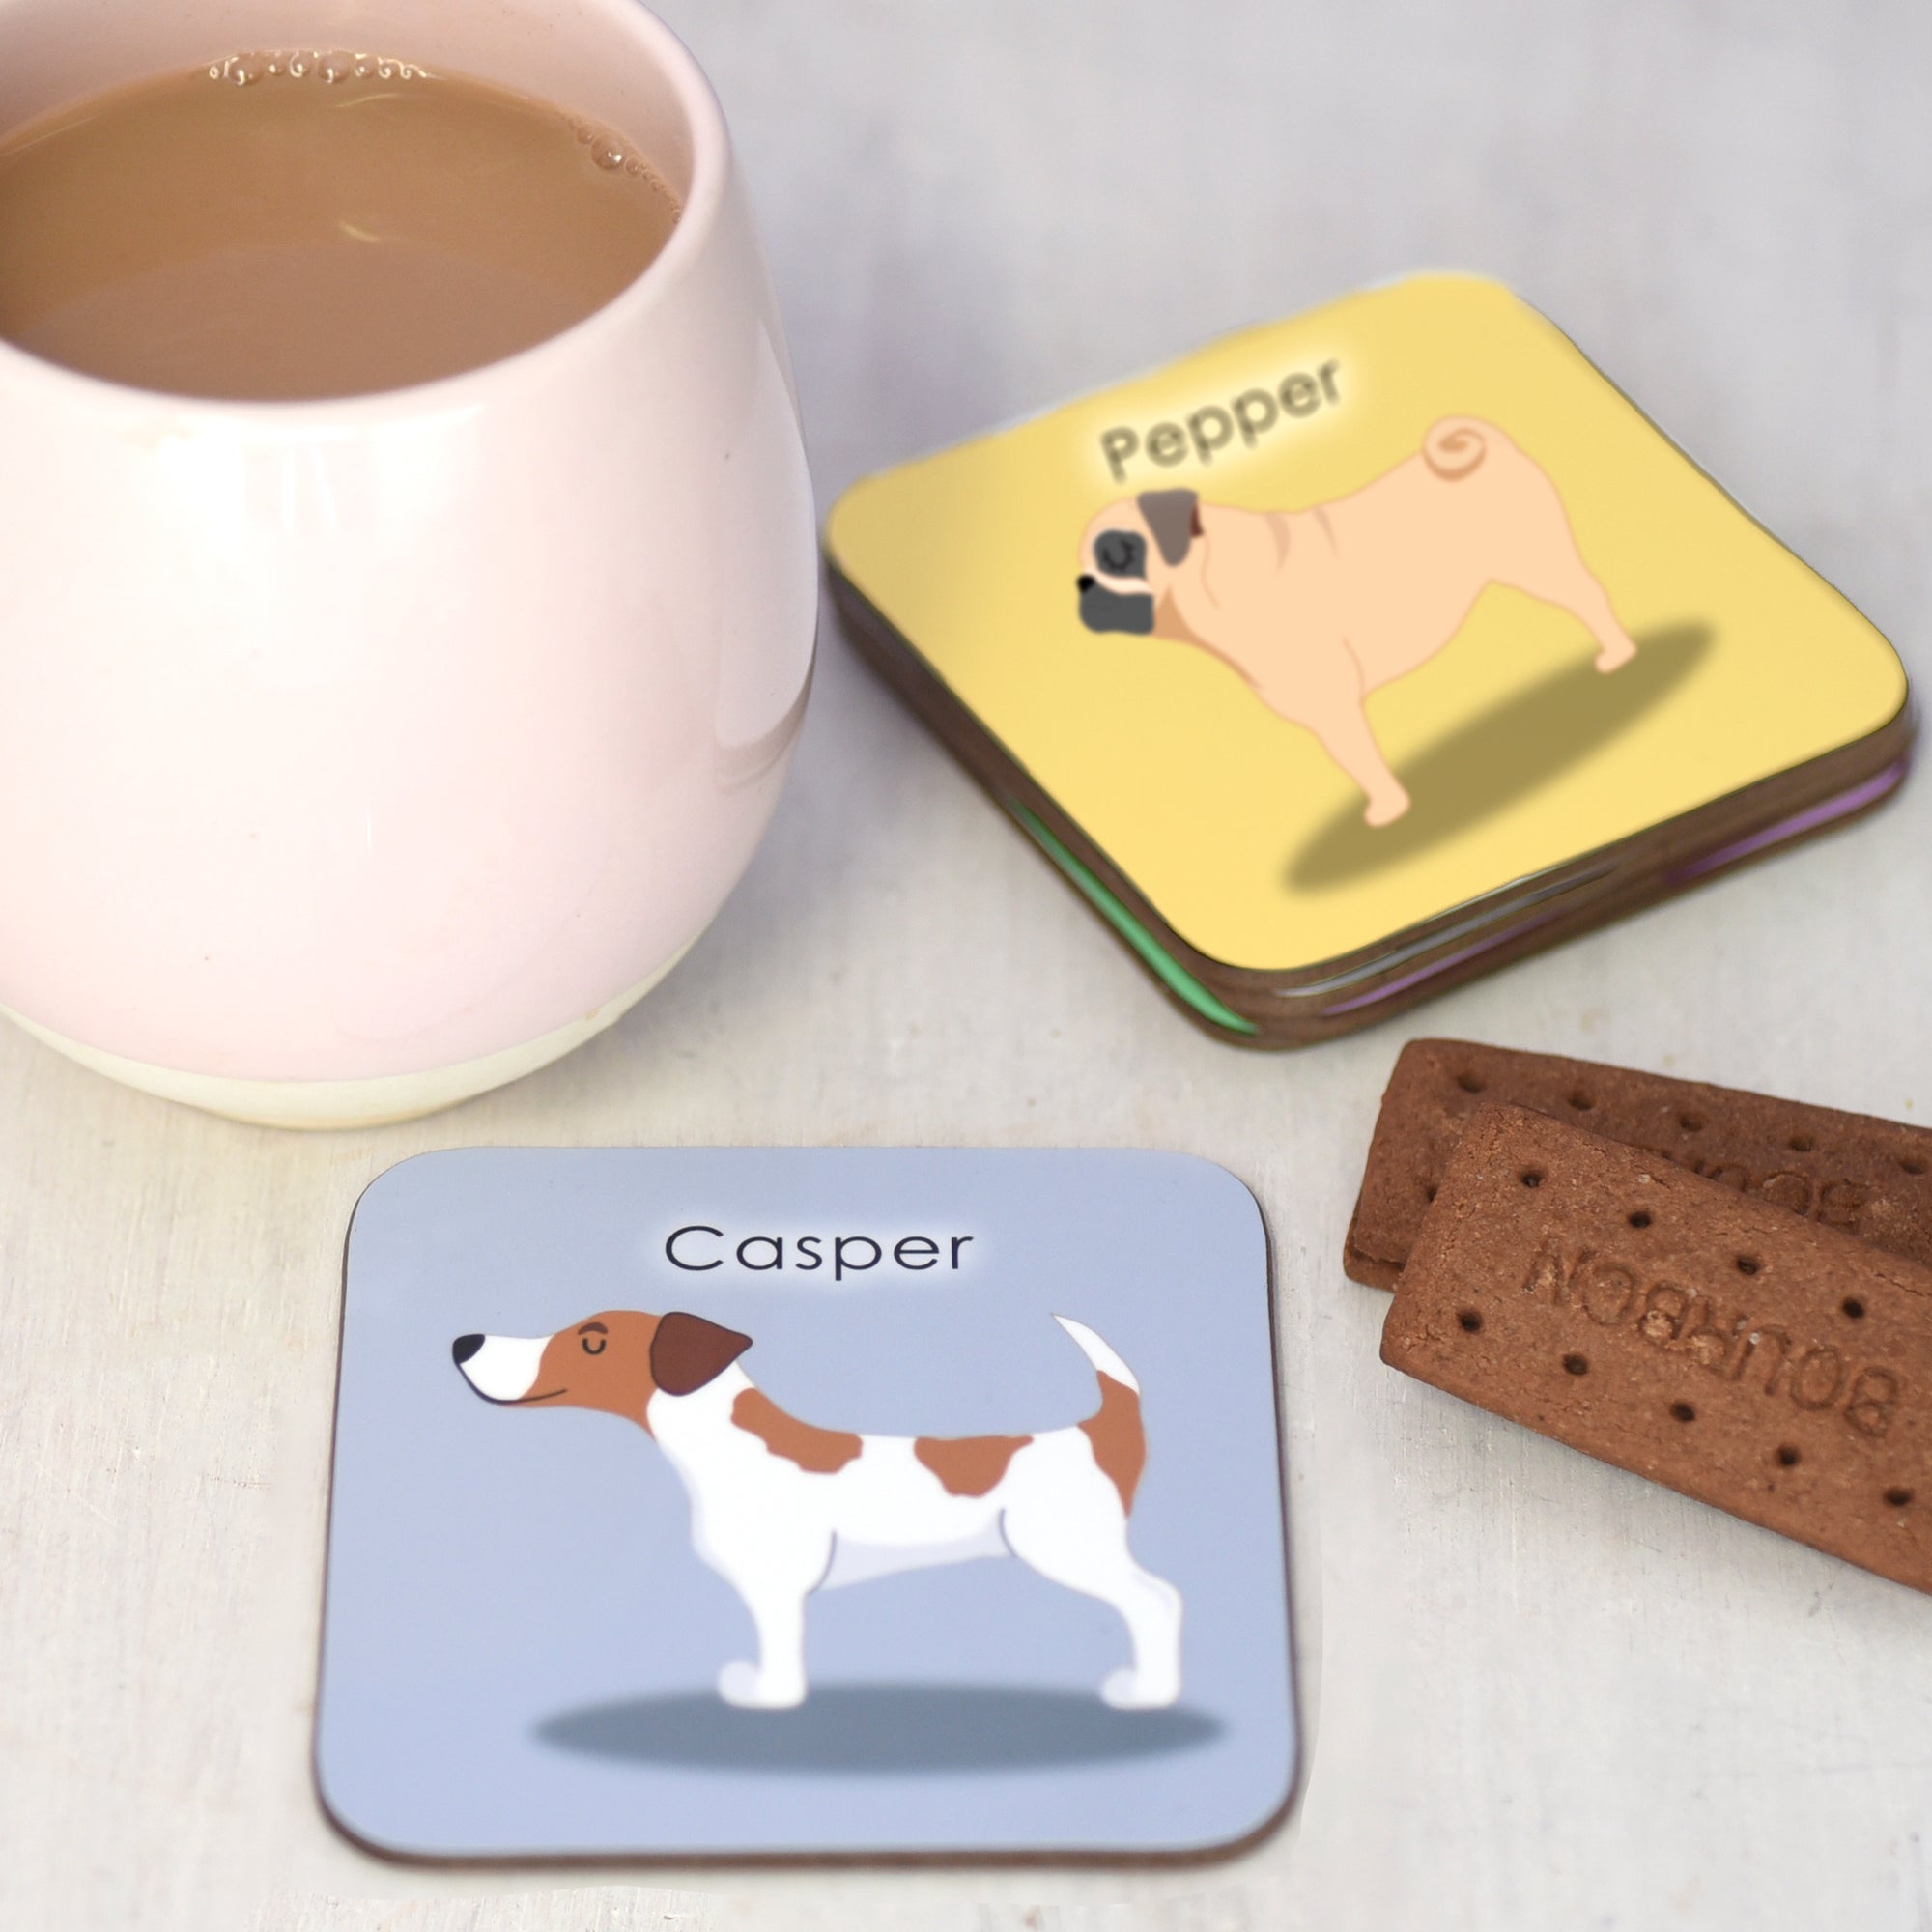 Personalised Cute Dog Coaster